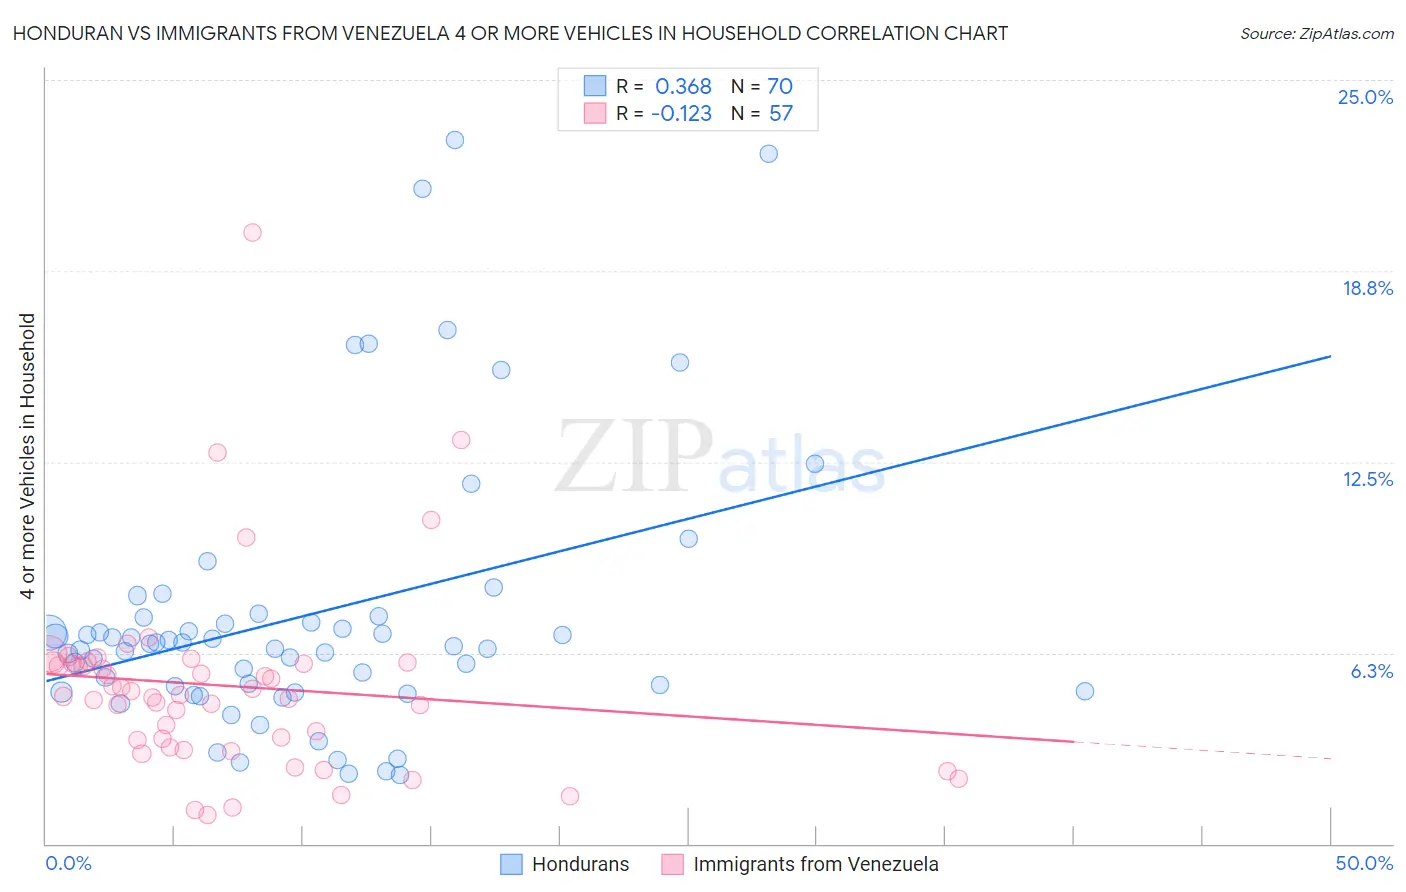 Honduran vs Immigrants from Venezuela 4 or more Vehicles in Household